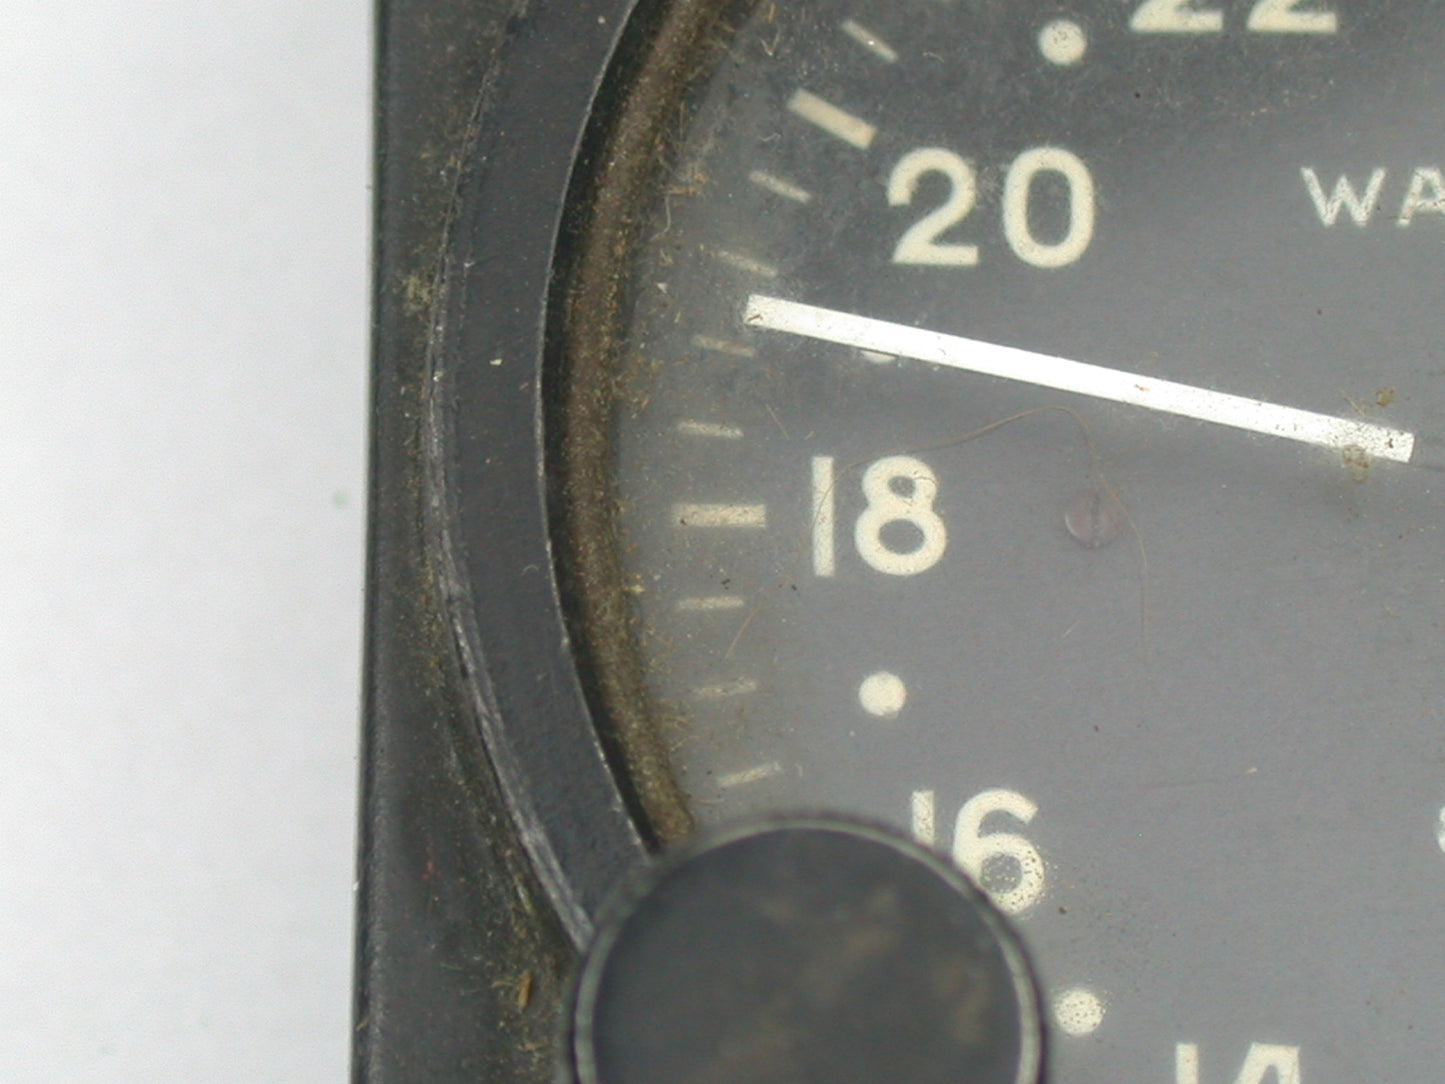 Lot 25- Swiss Wakmann Military Airplane Clock